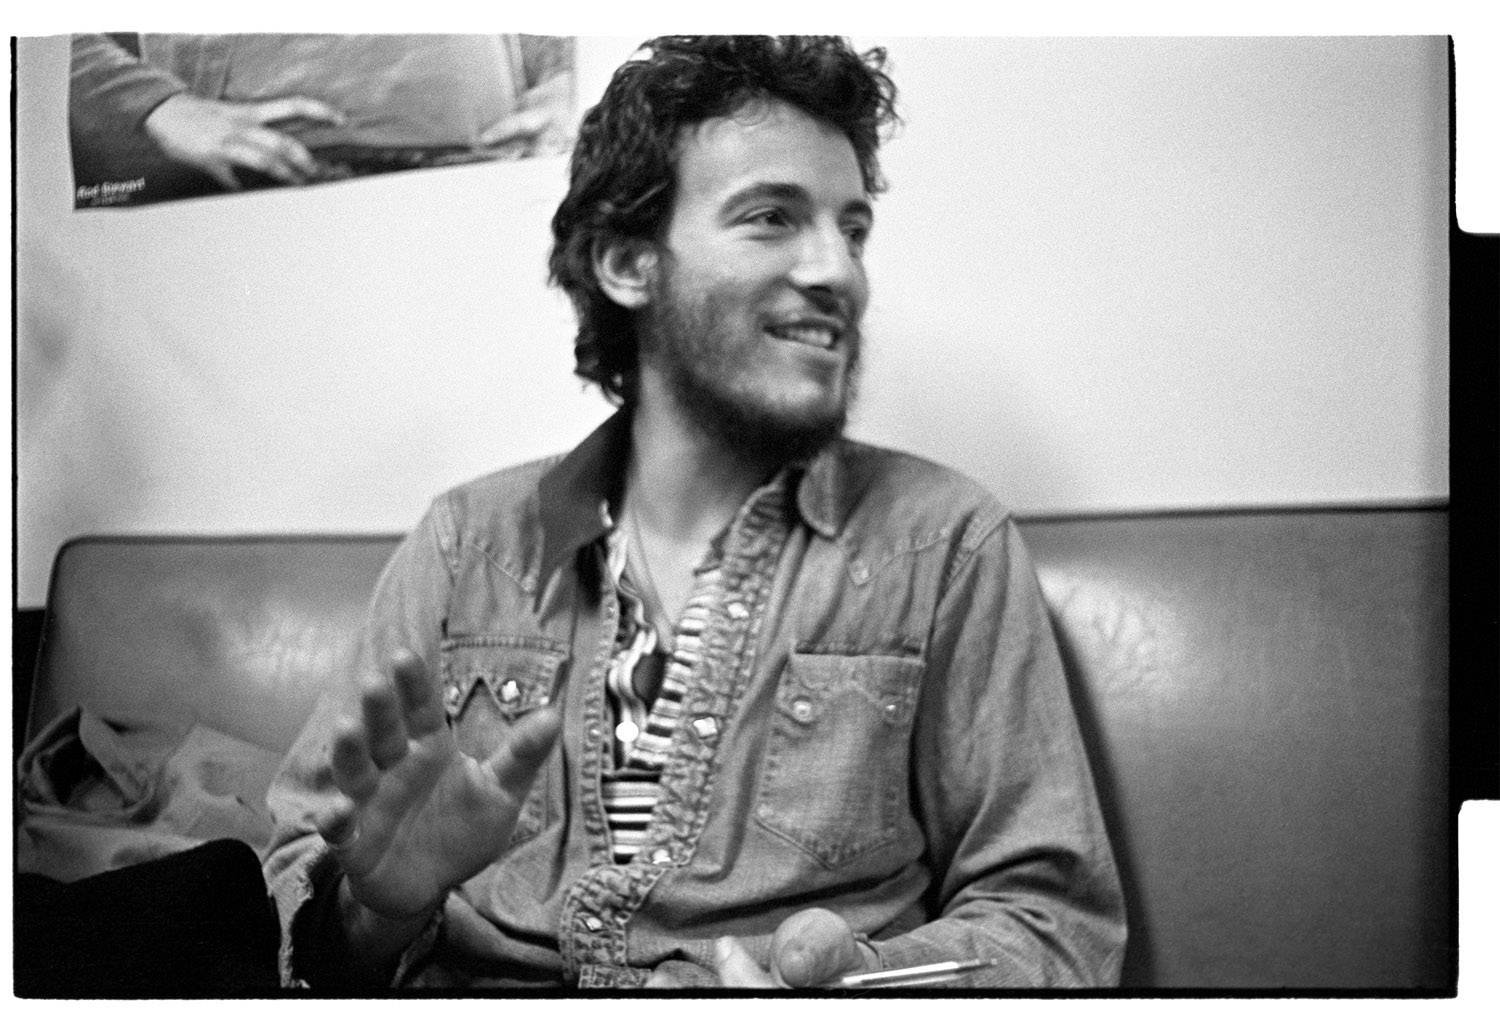 Brice Springsteen photo 1973, Credit: Roz Levin